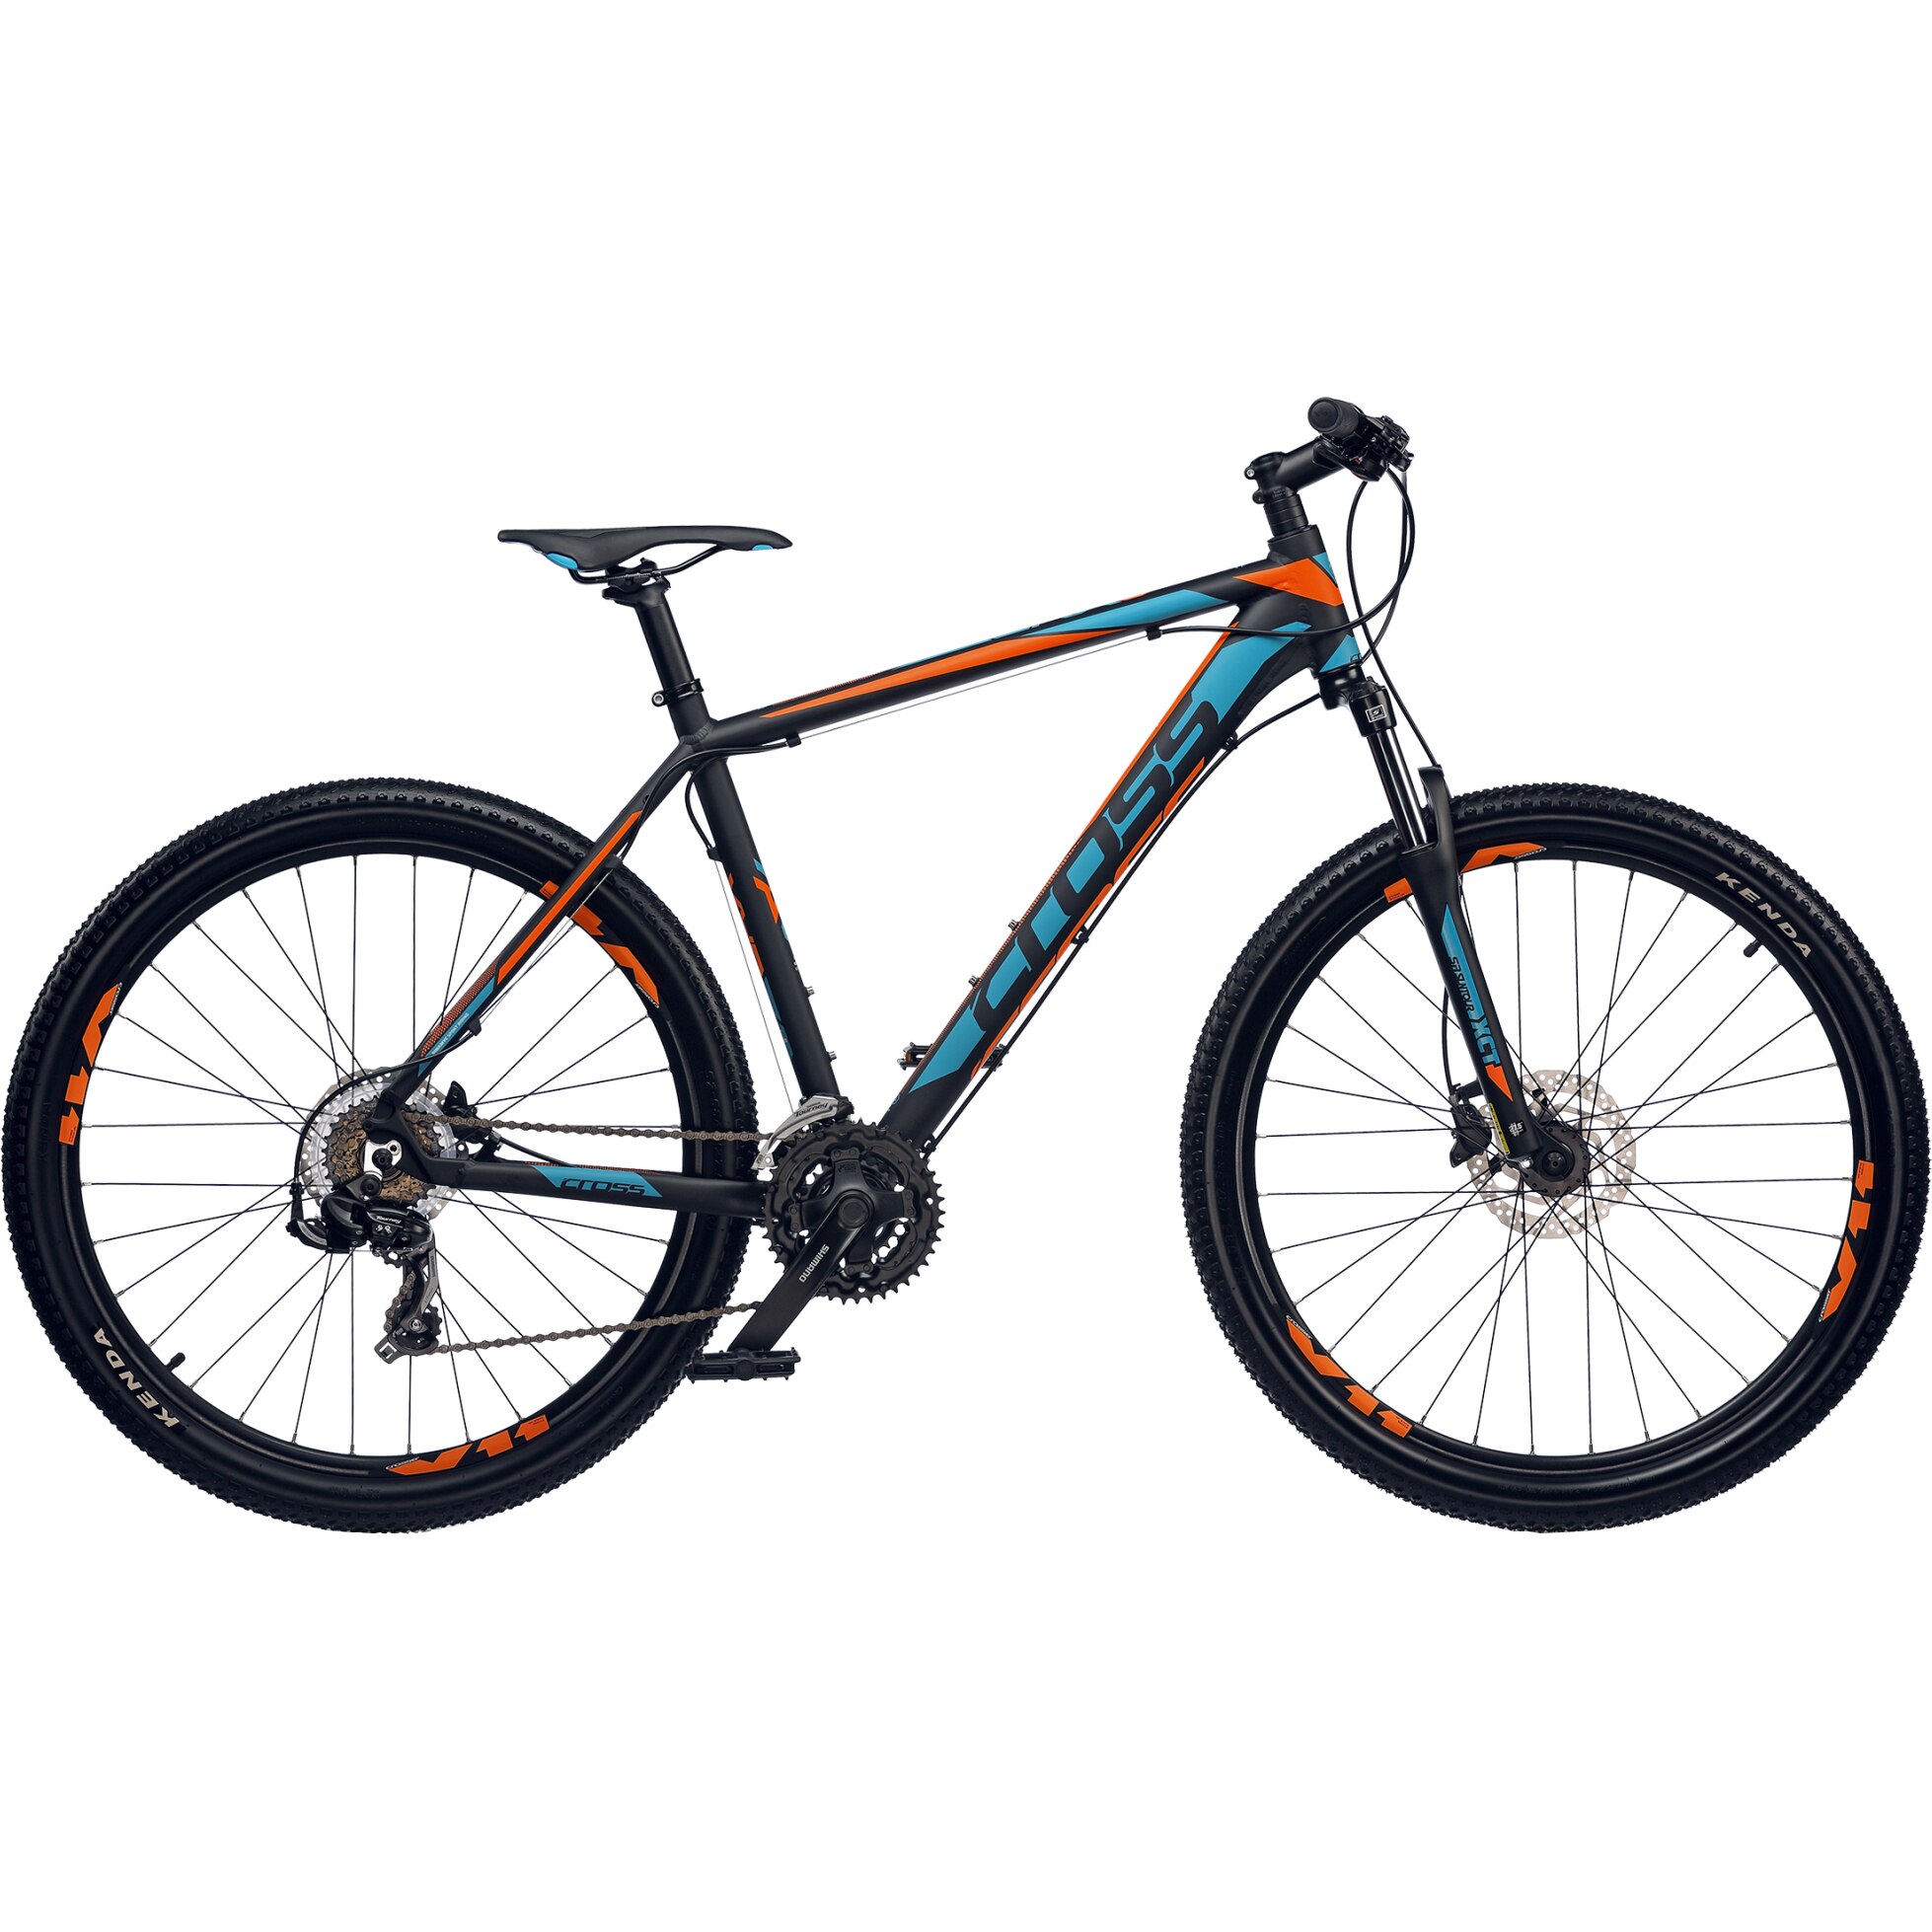 Fotografie Bicicleta MTB 29-er Cross GRX 7 hdb, Black/Blue, 51cm